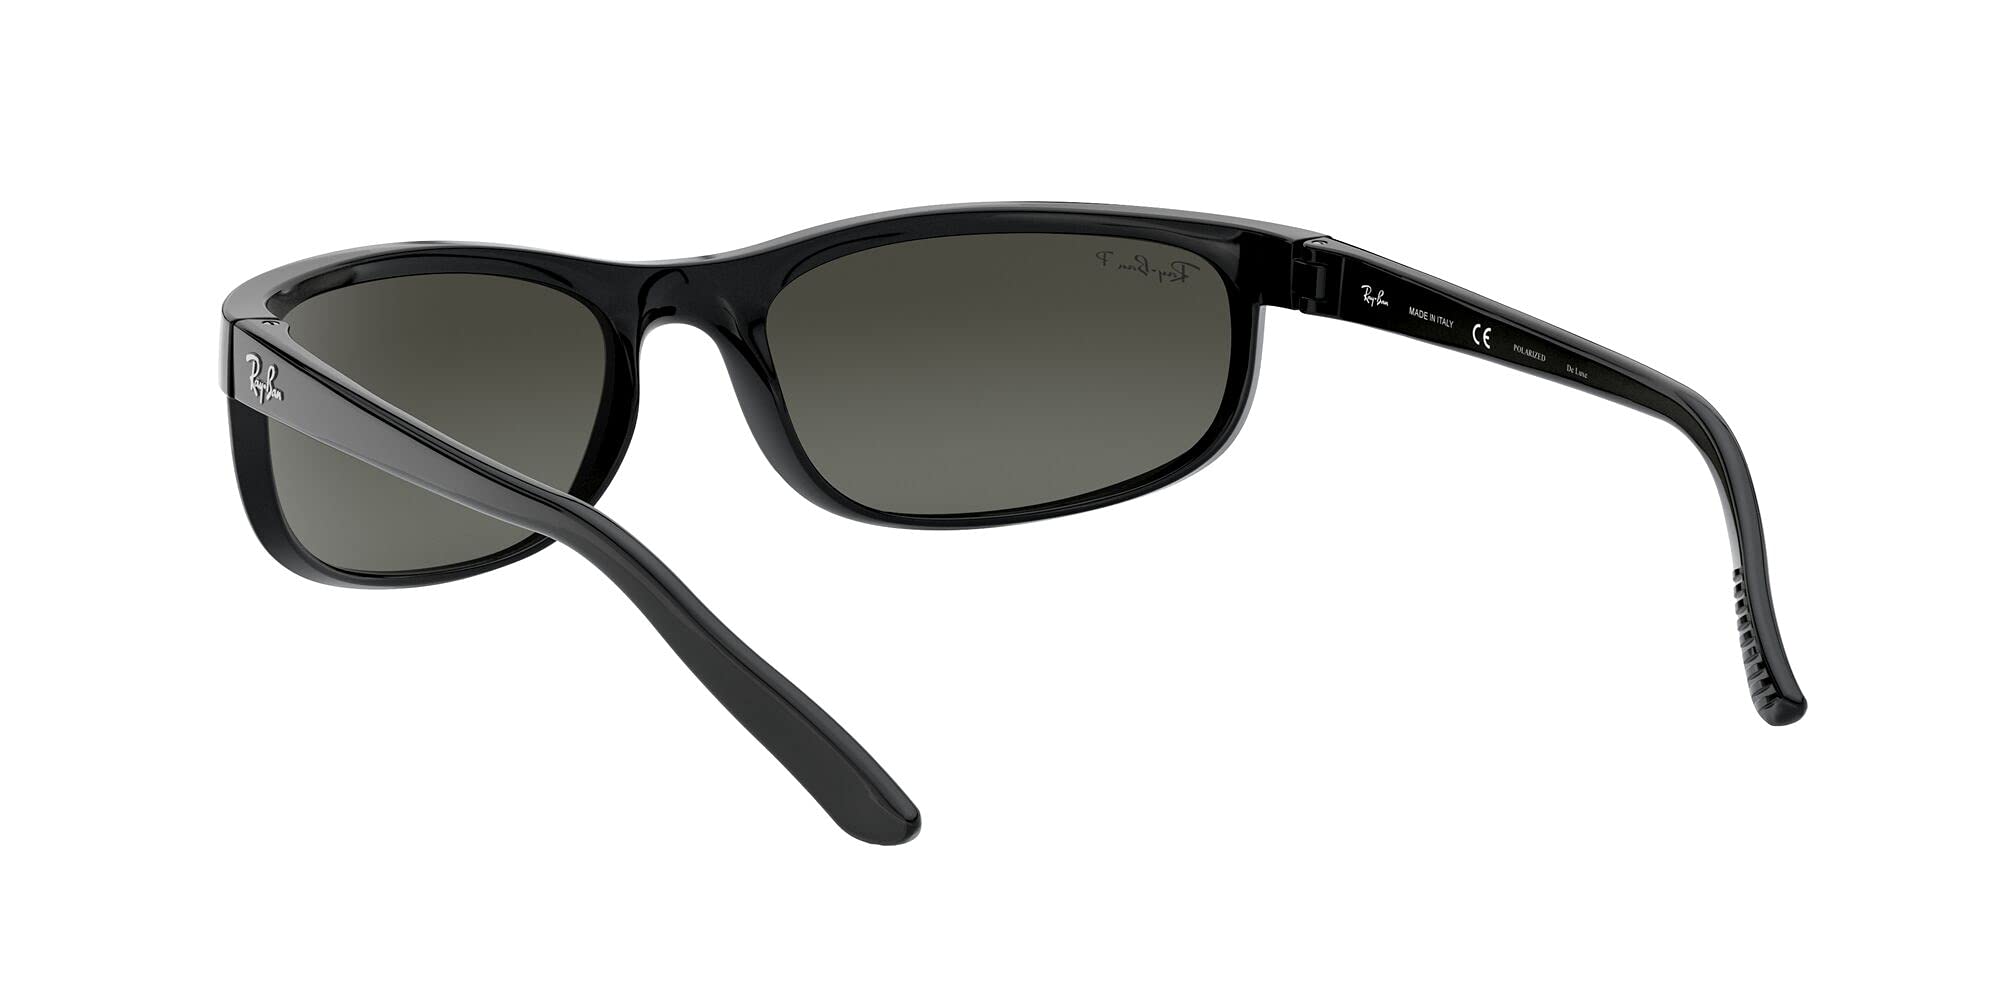 Ray-Ban Unisex Sunglasses Black Frame, Polarized Grey Mirror Lenses, 62MM